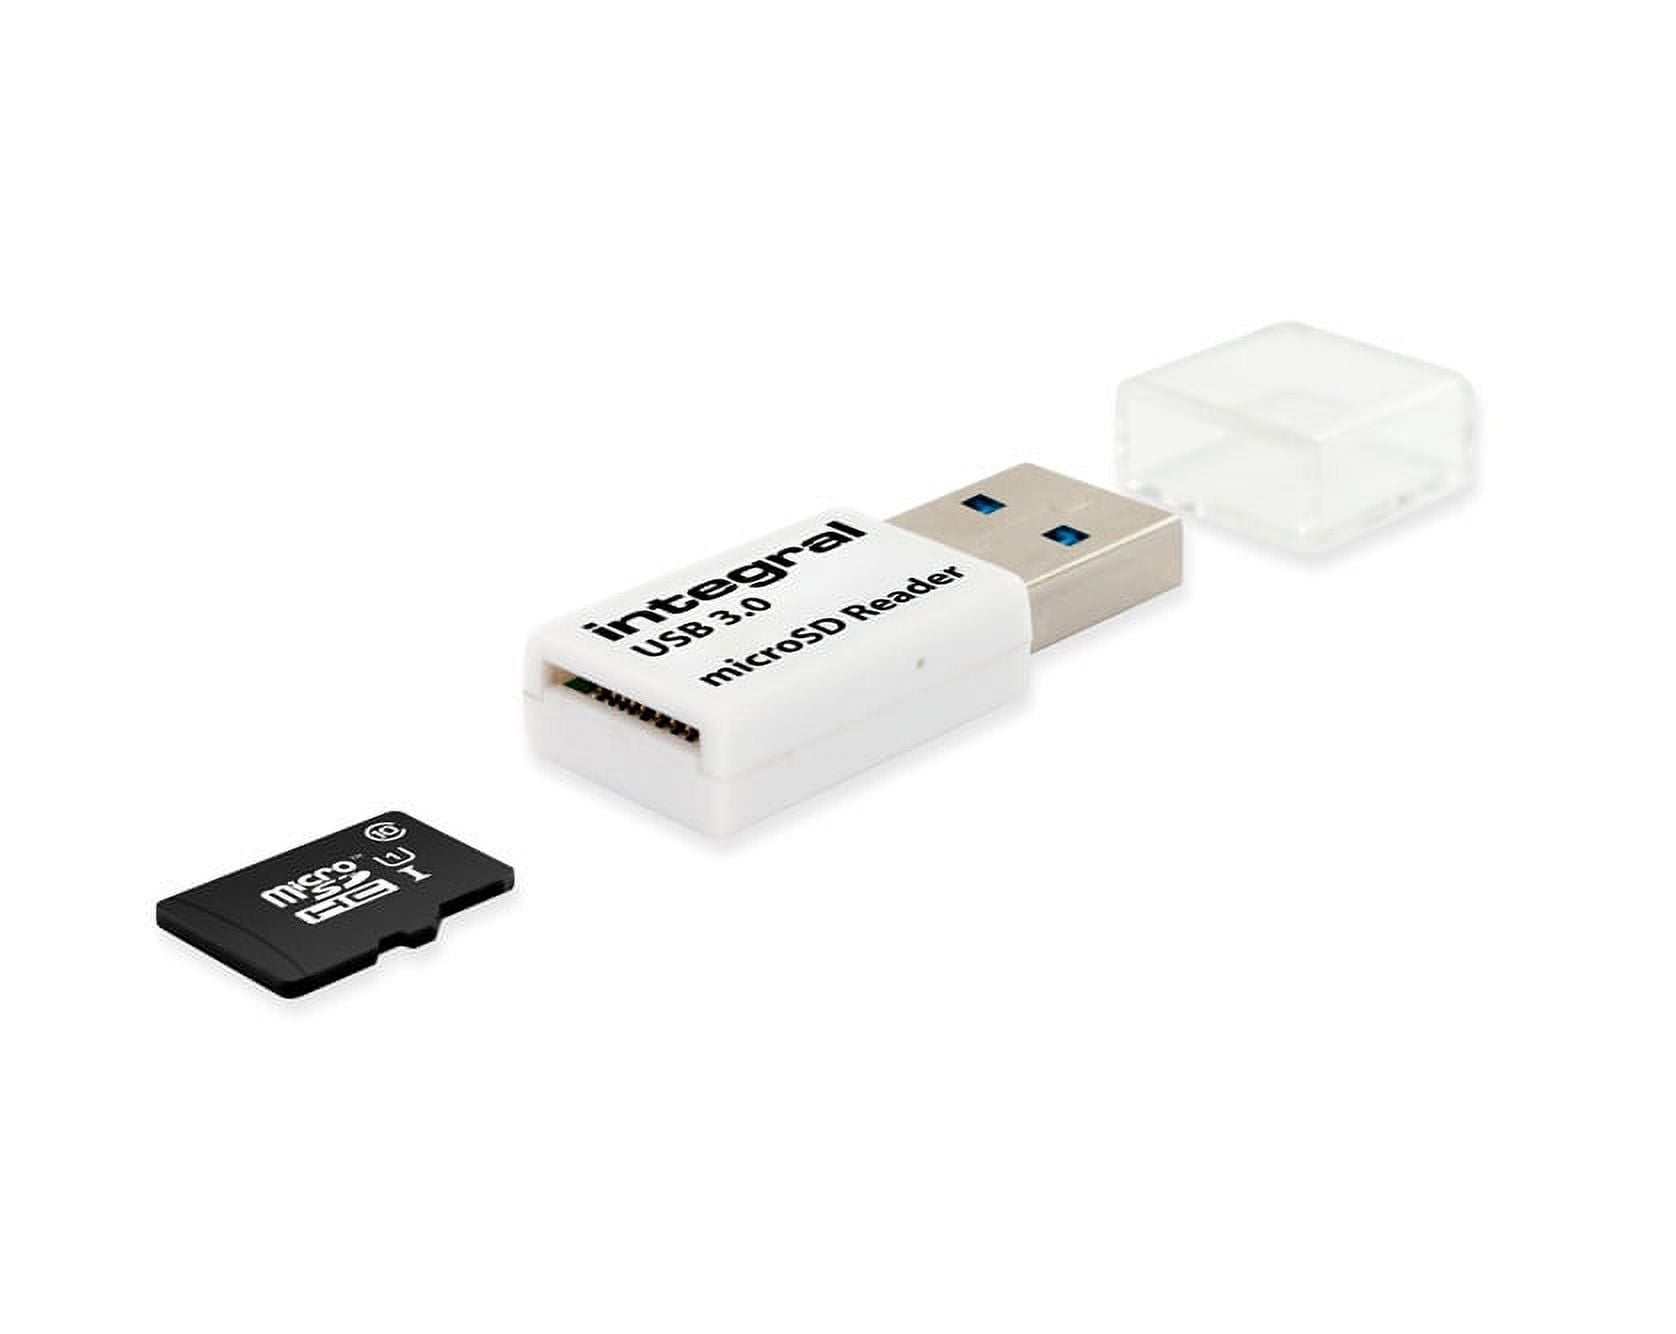 Integral Memory Lecteur de Cartes SD et Micro SD UHS-II USB 3.0